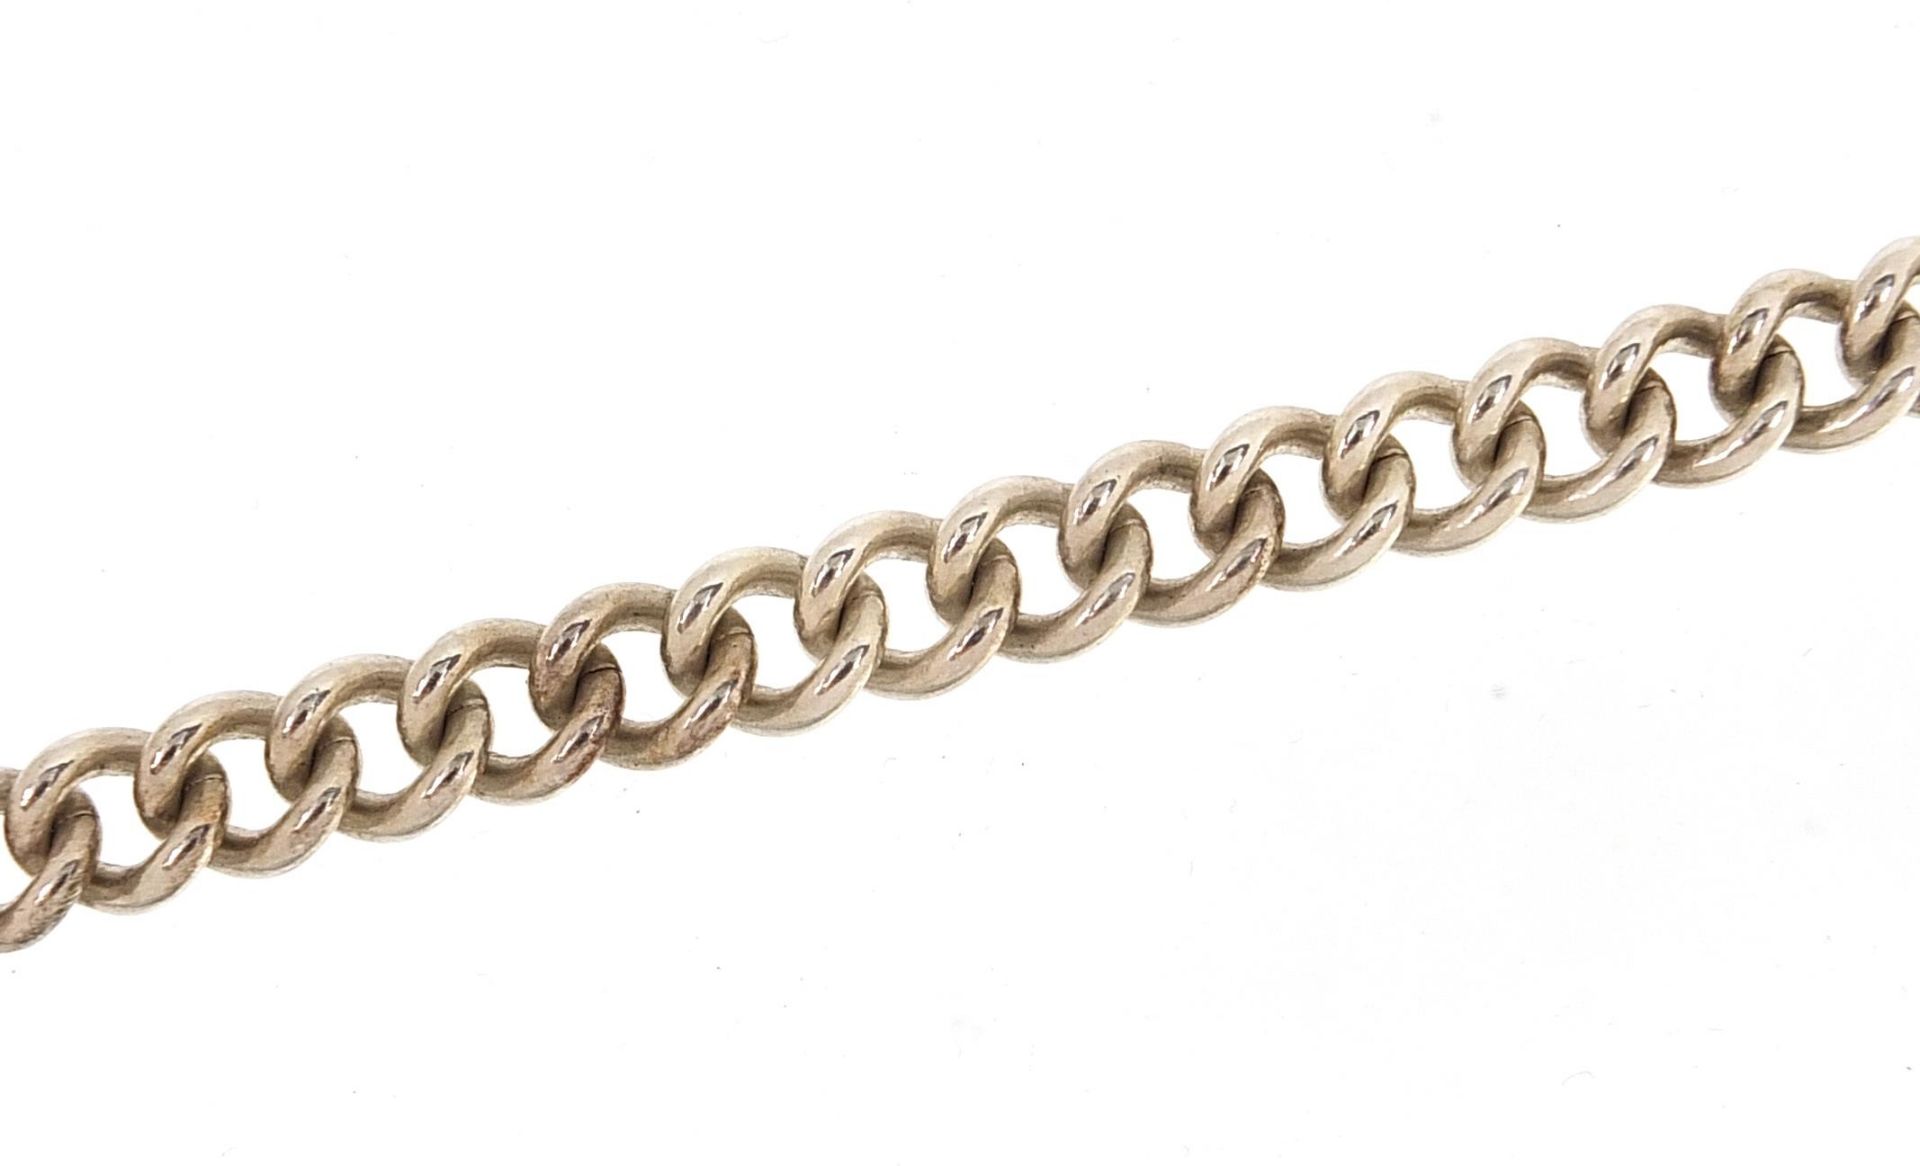 Heavy silver curb link bracelet, 20cm in length, 42.7g